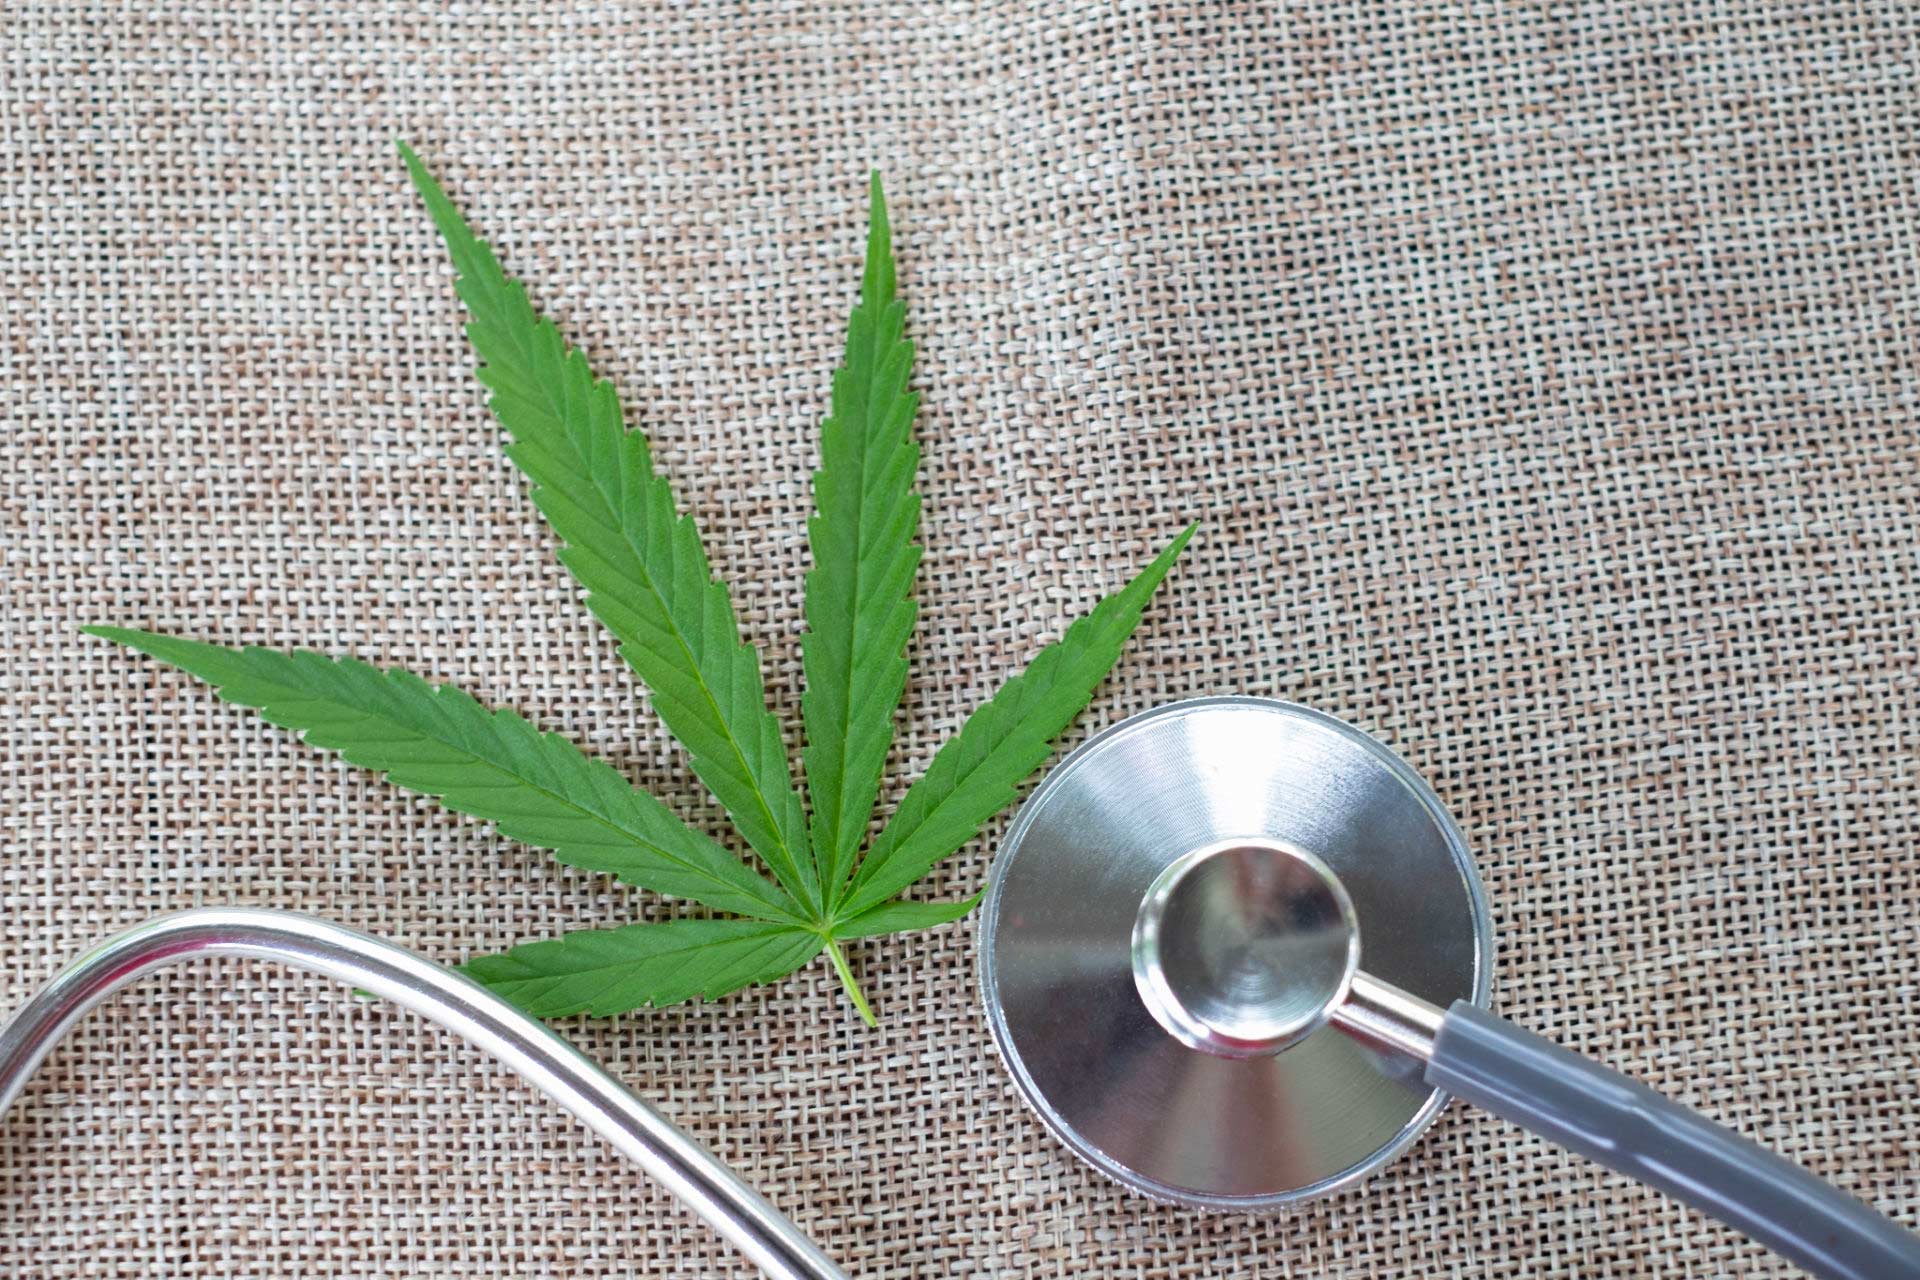 Nurse’s stethoscope and a cannabis leaf on natural hemp fabric background